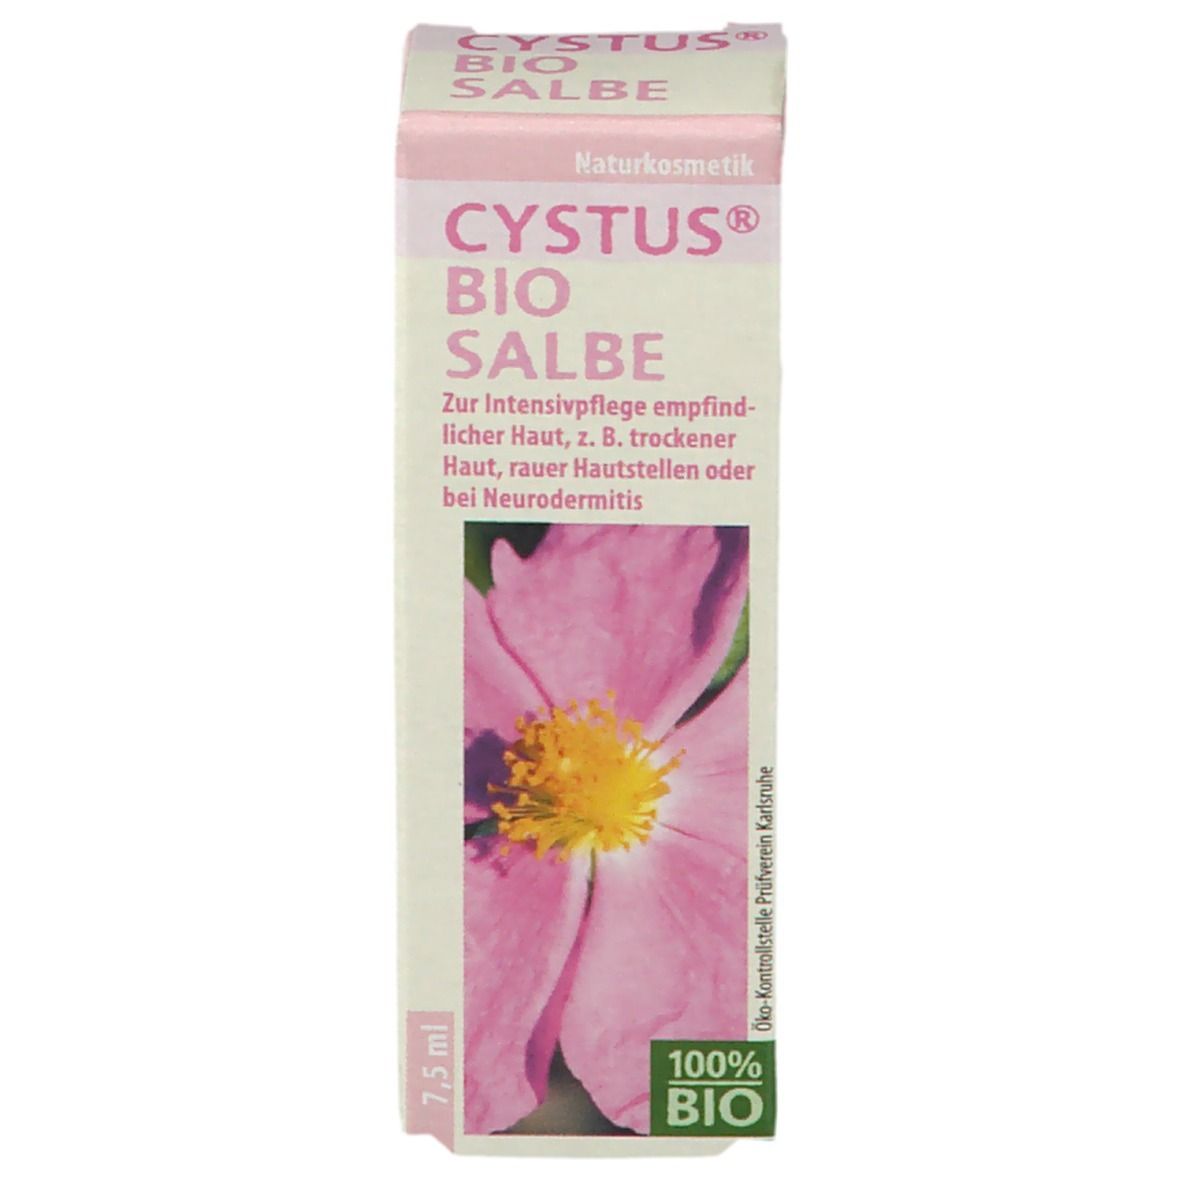 Cystus® Bio Salbe